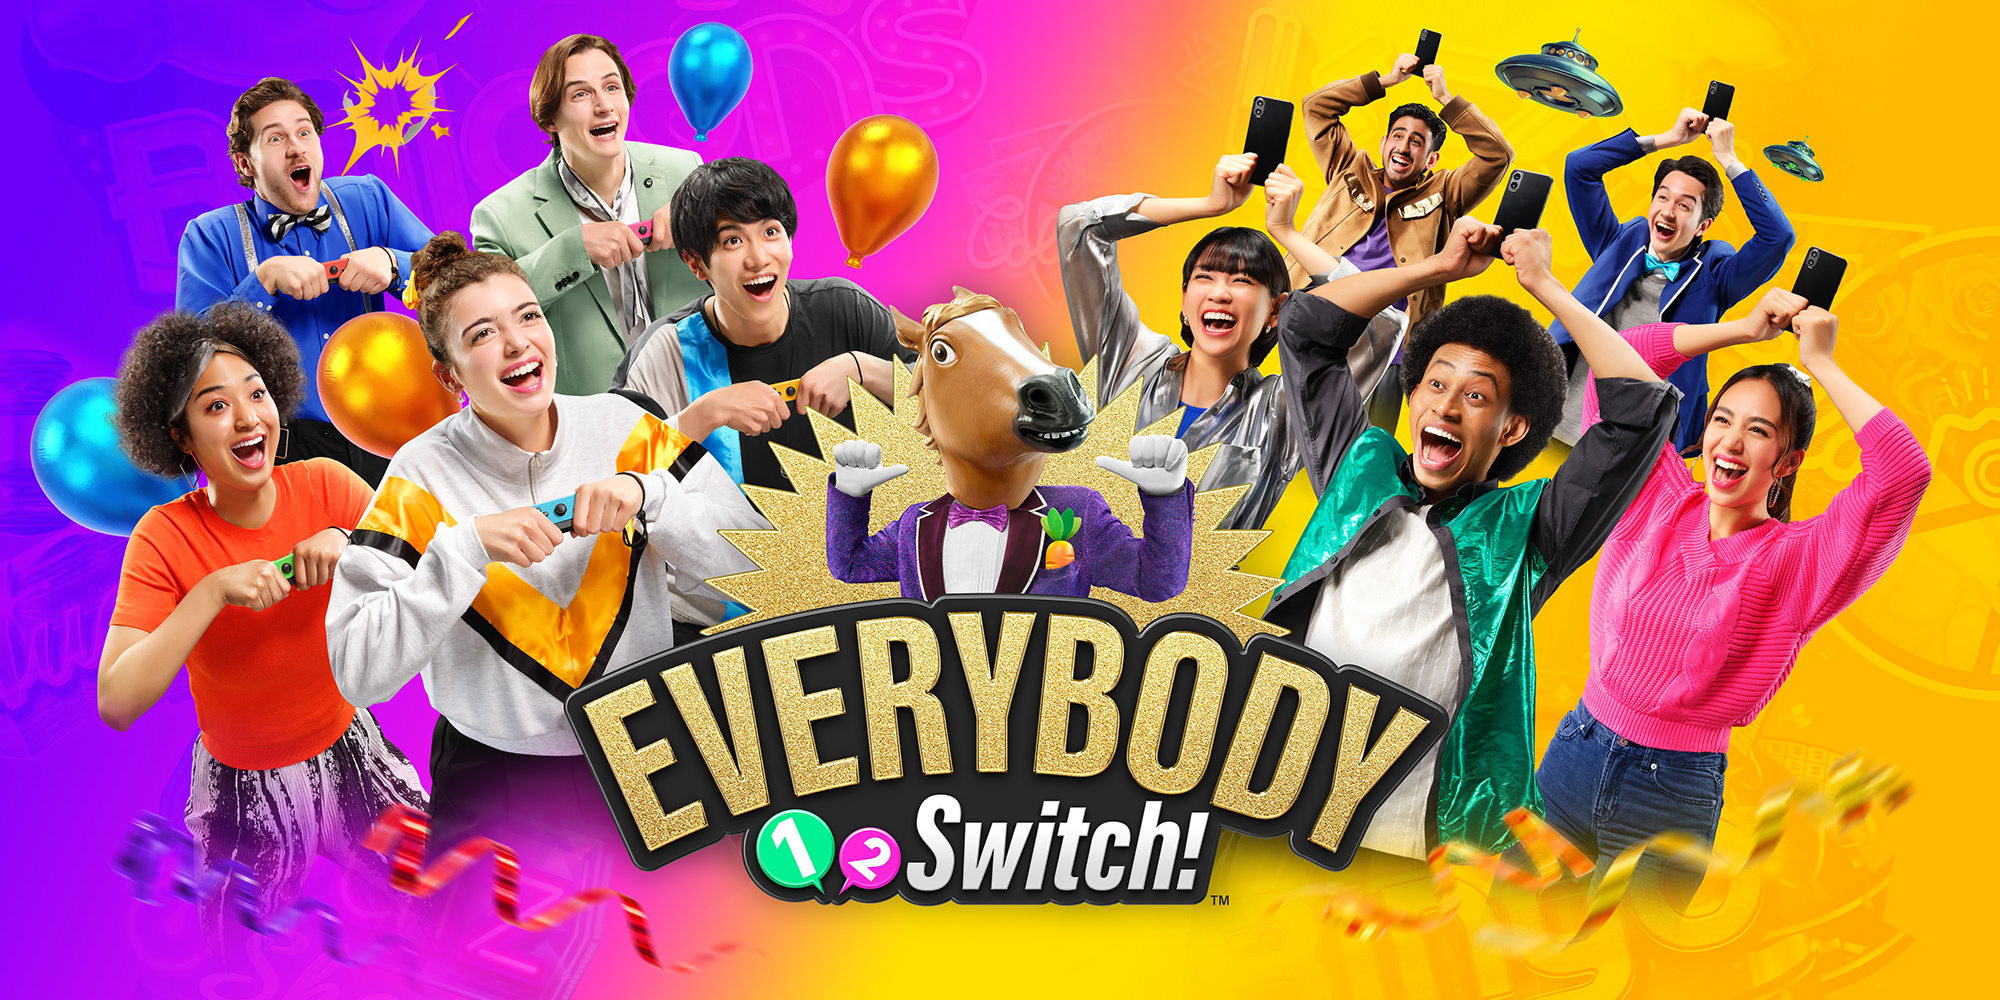  Everybody 1-2 Switch! - Nintendo Switch : Nintendo of